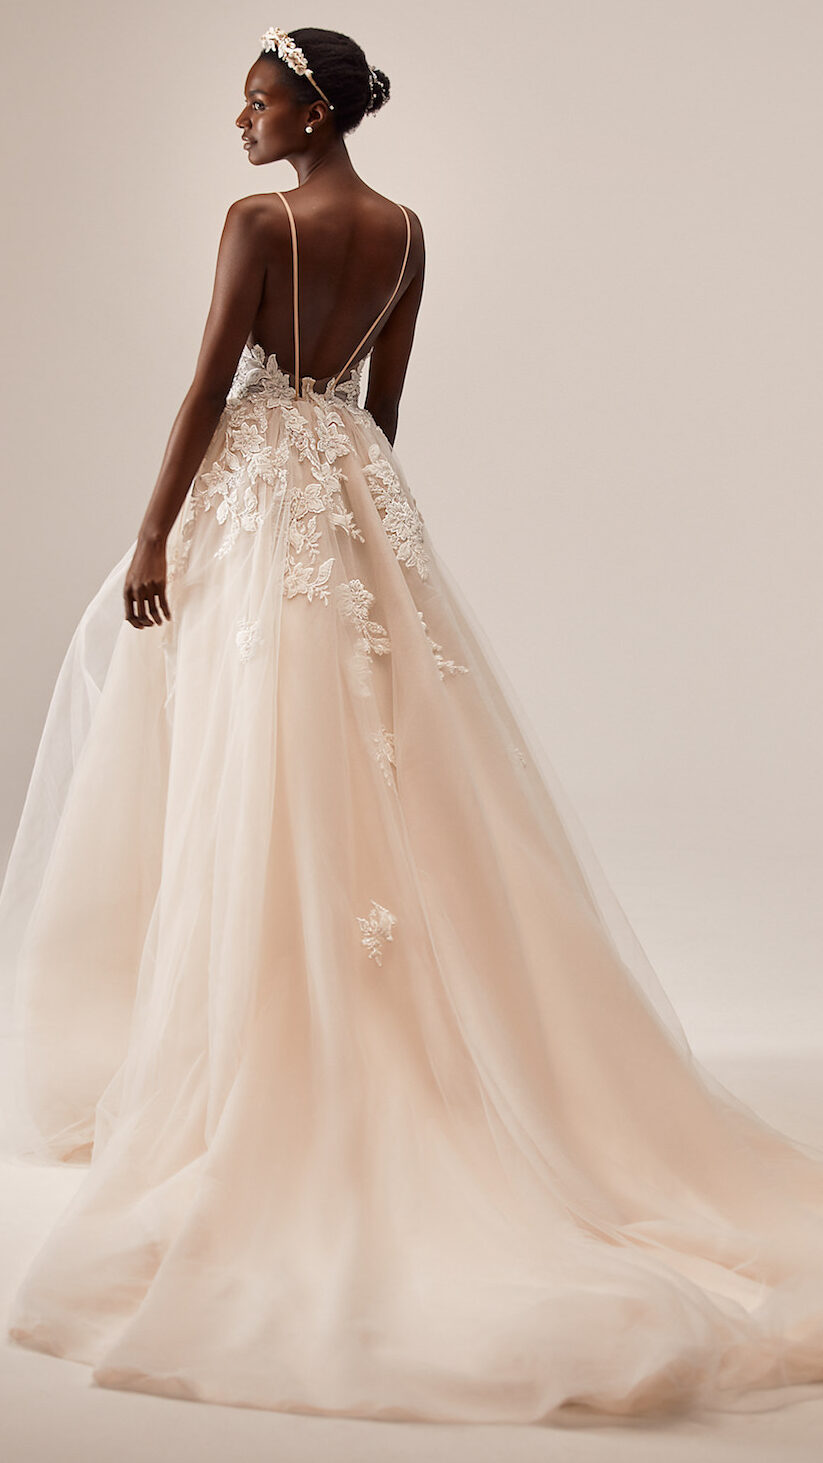 Romantic ball gown Wedding Dress by Milla Nova - Carolina white lace